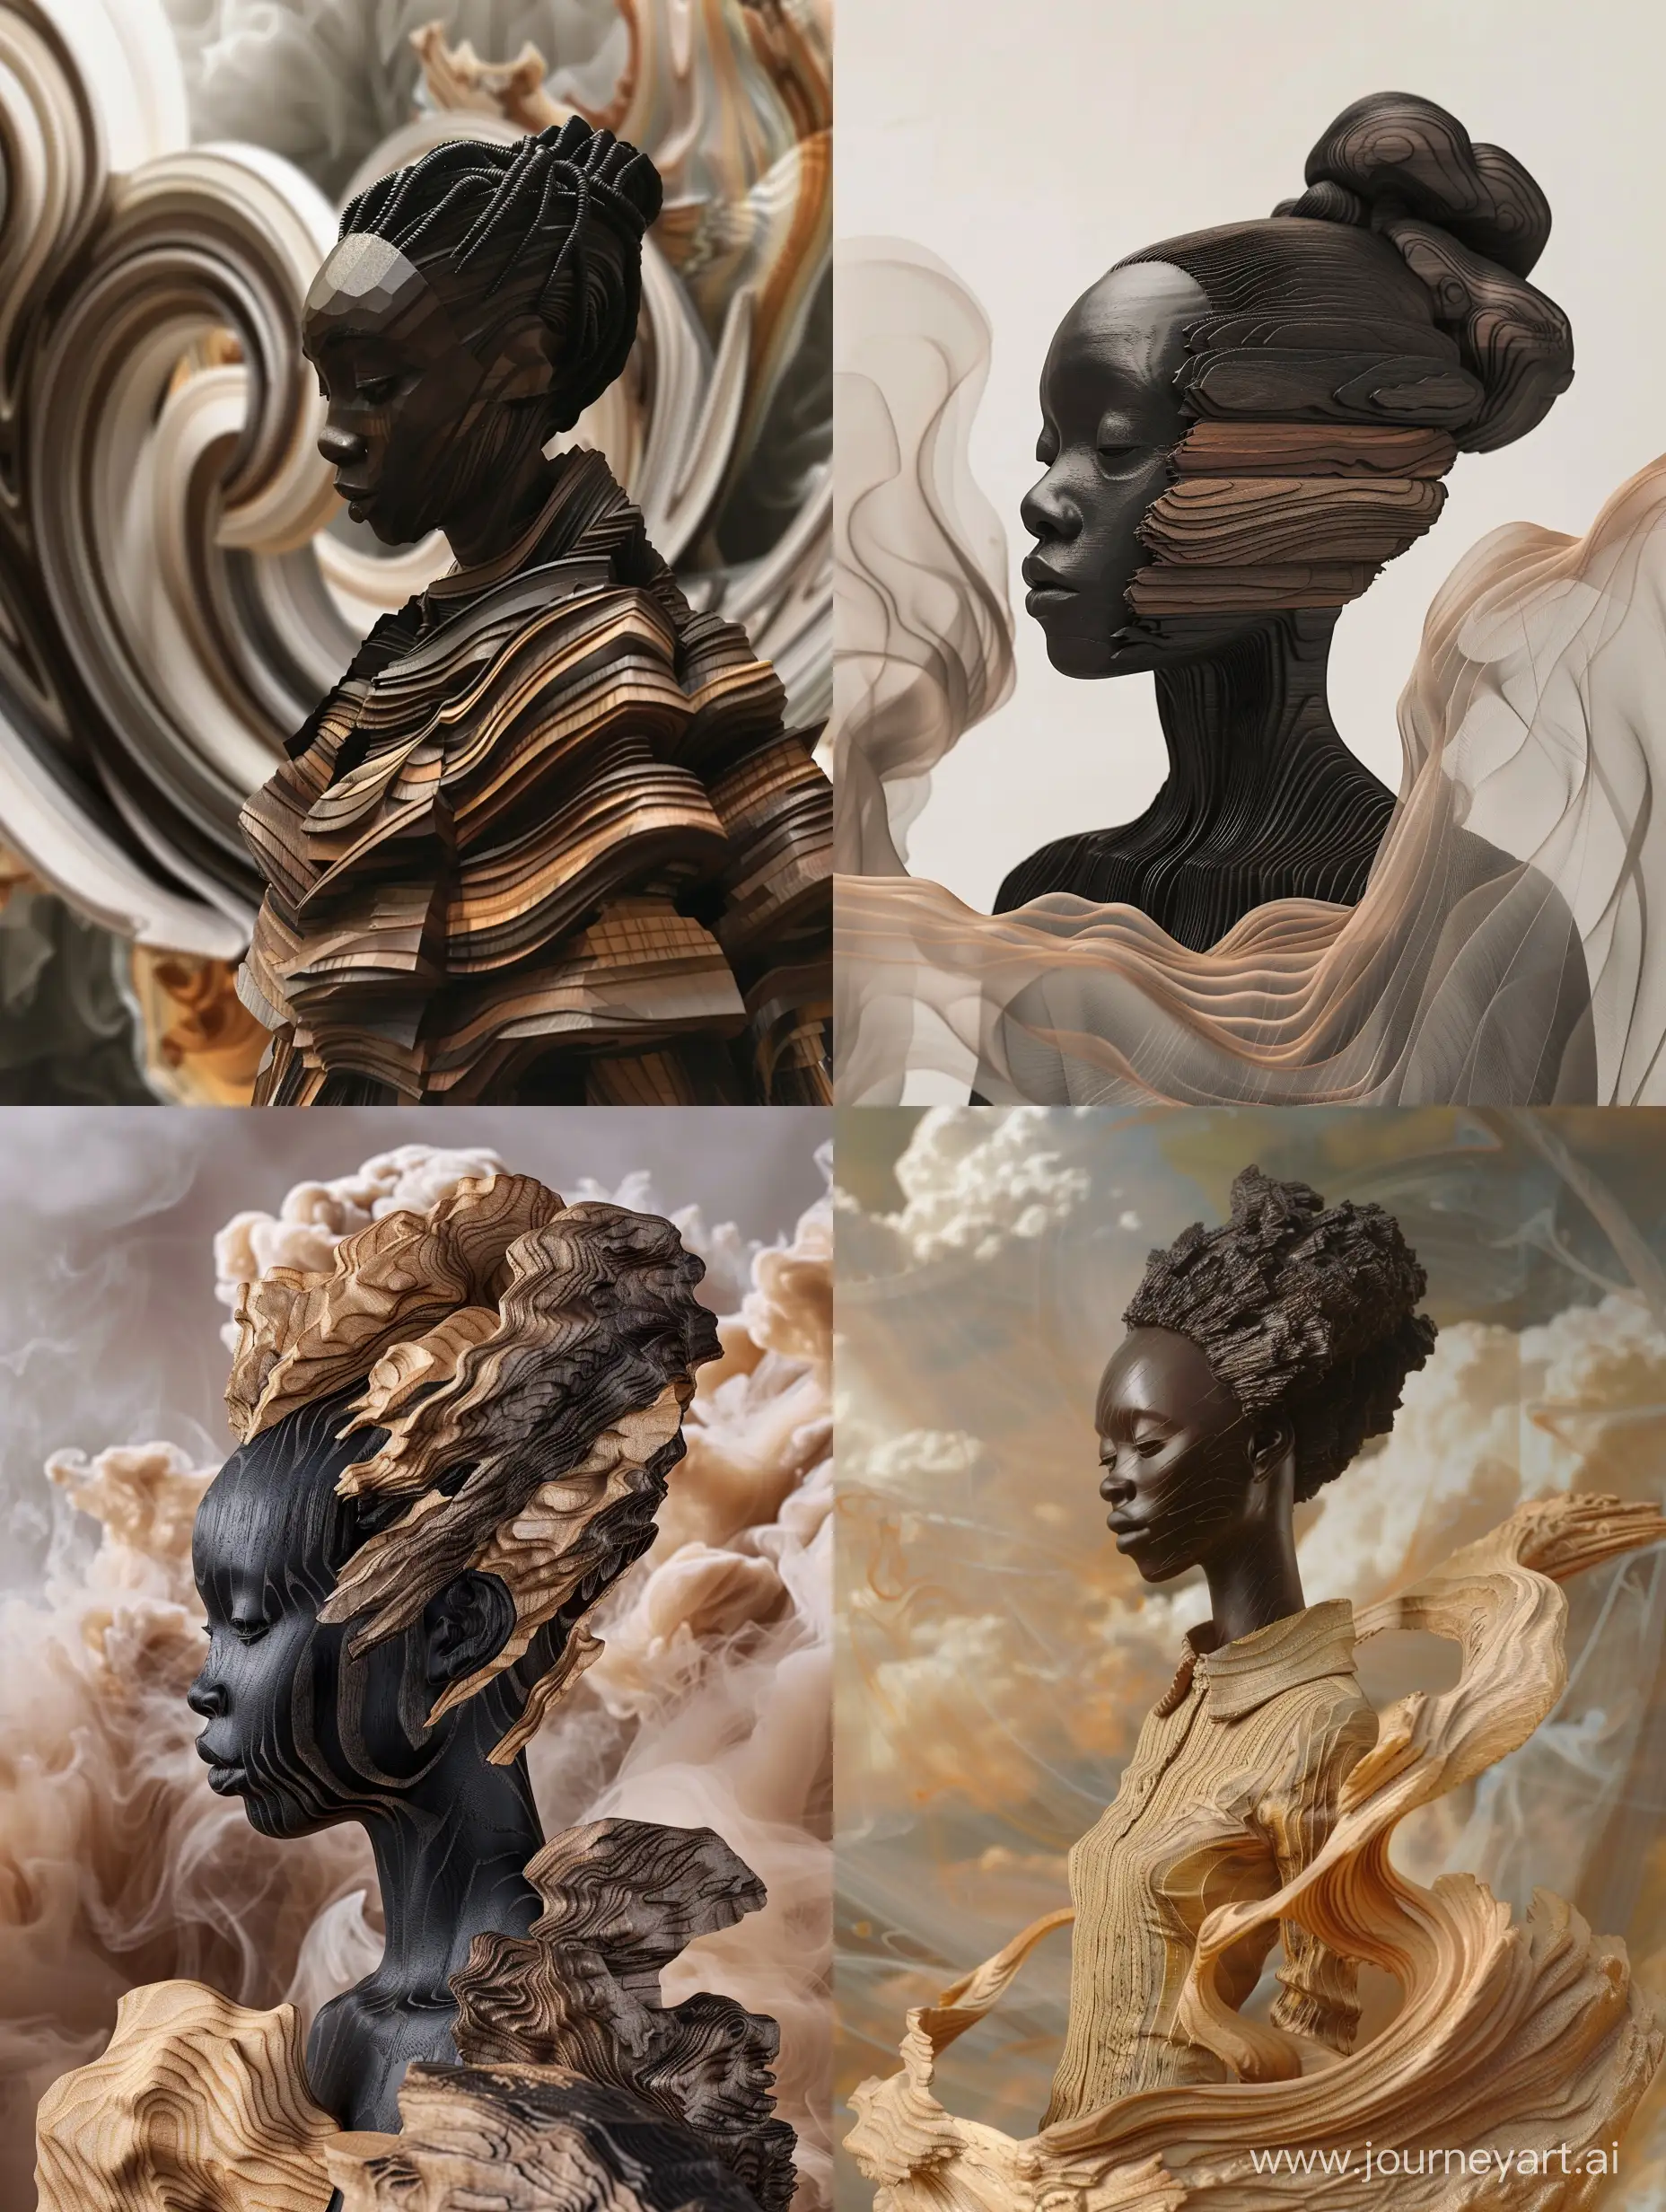 Ethereal-Wooden-Sculpture-Inspiring-Black-Woman-in-the-Style-of-Hugh-Kretschmer